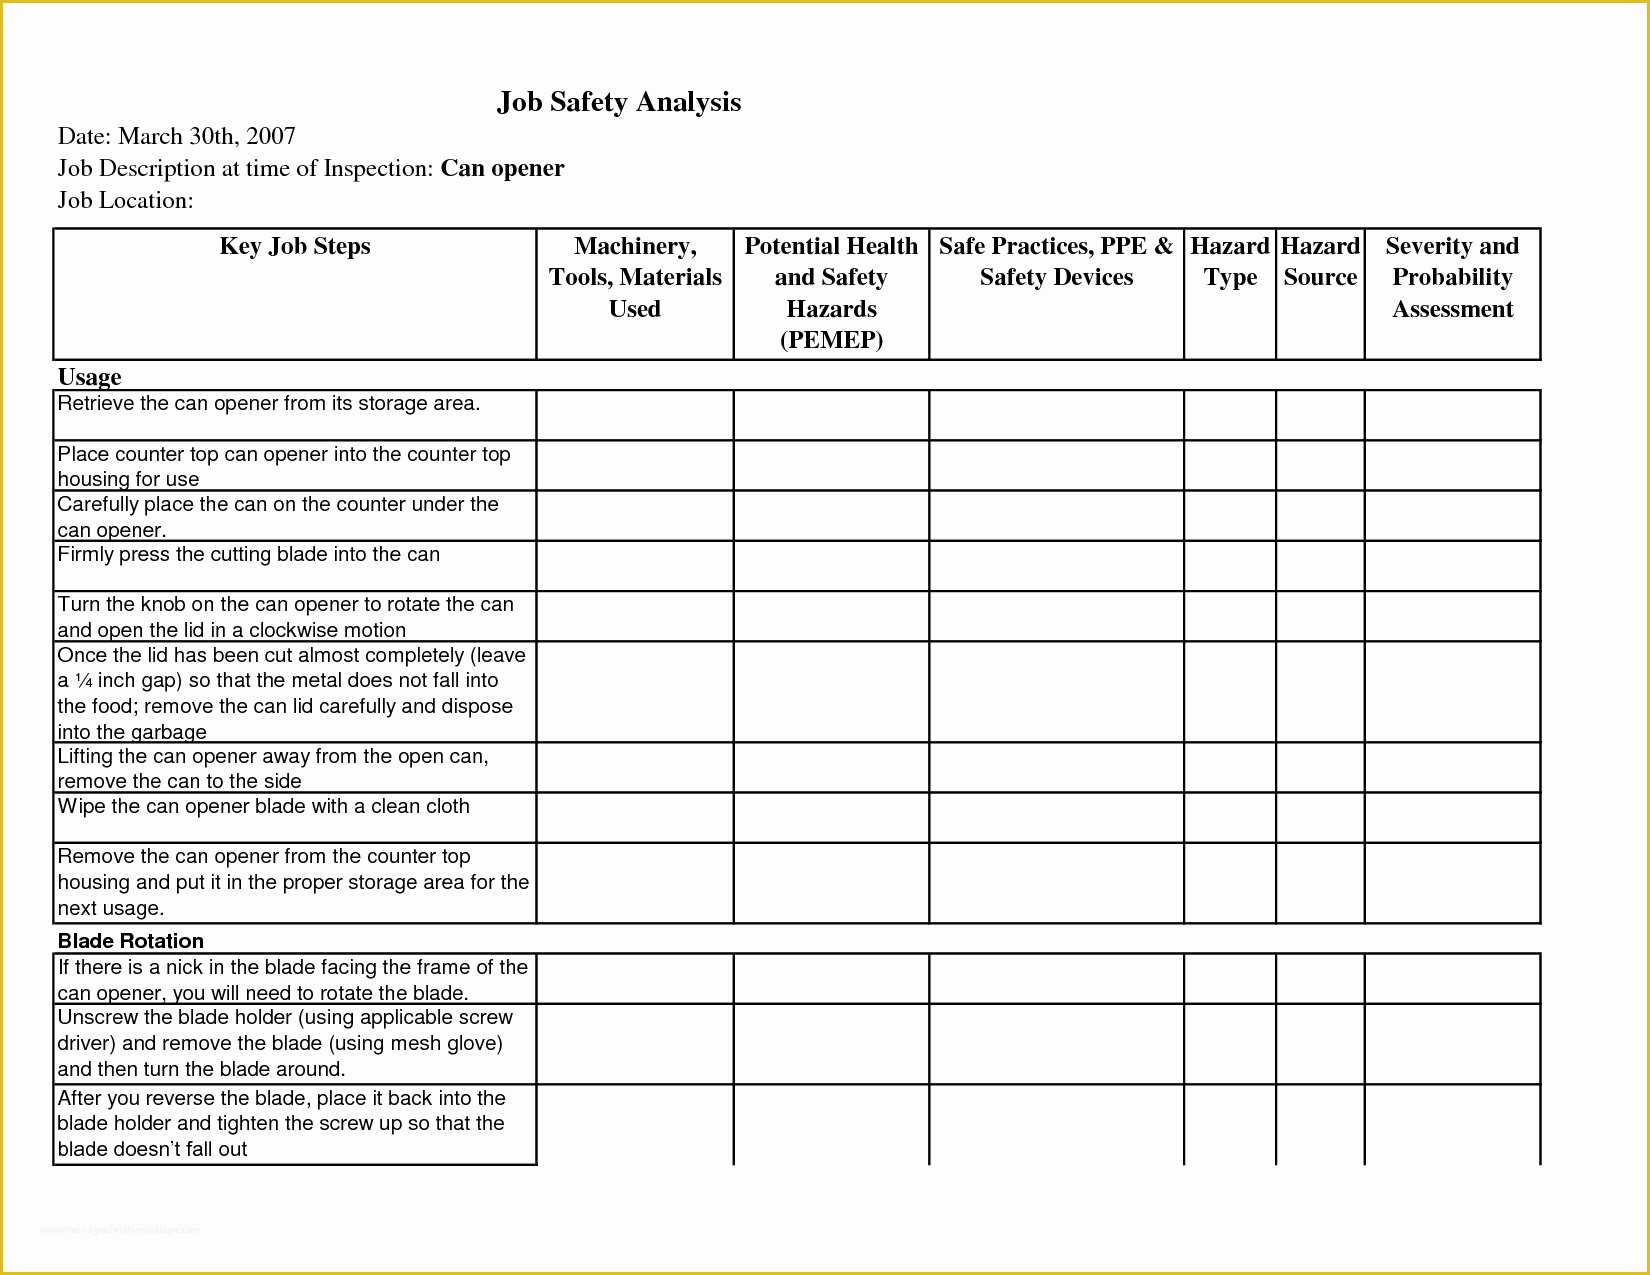 Journal of job safety analysis